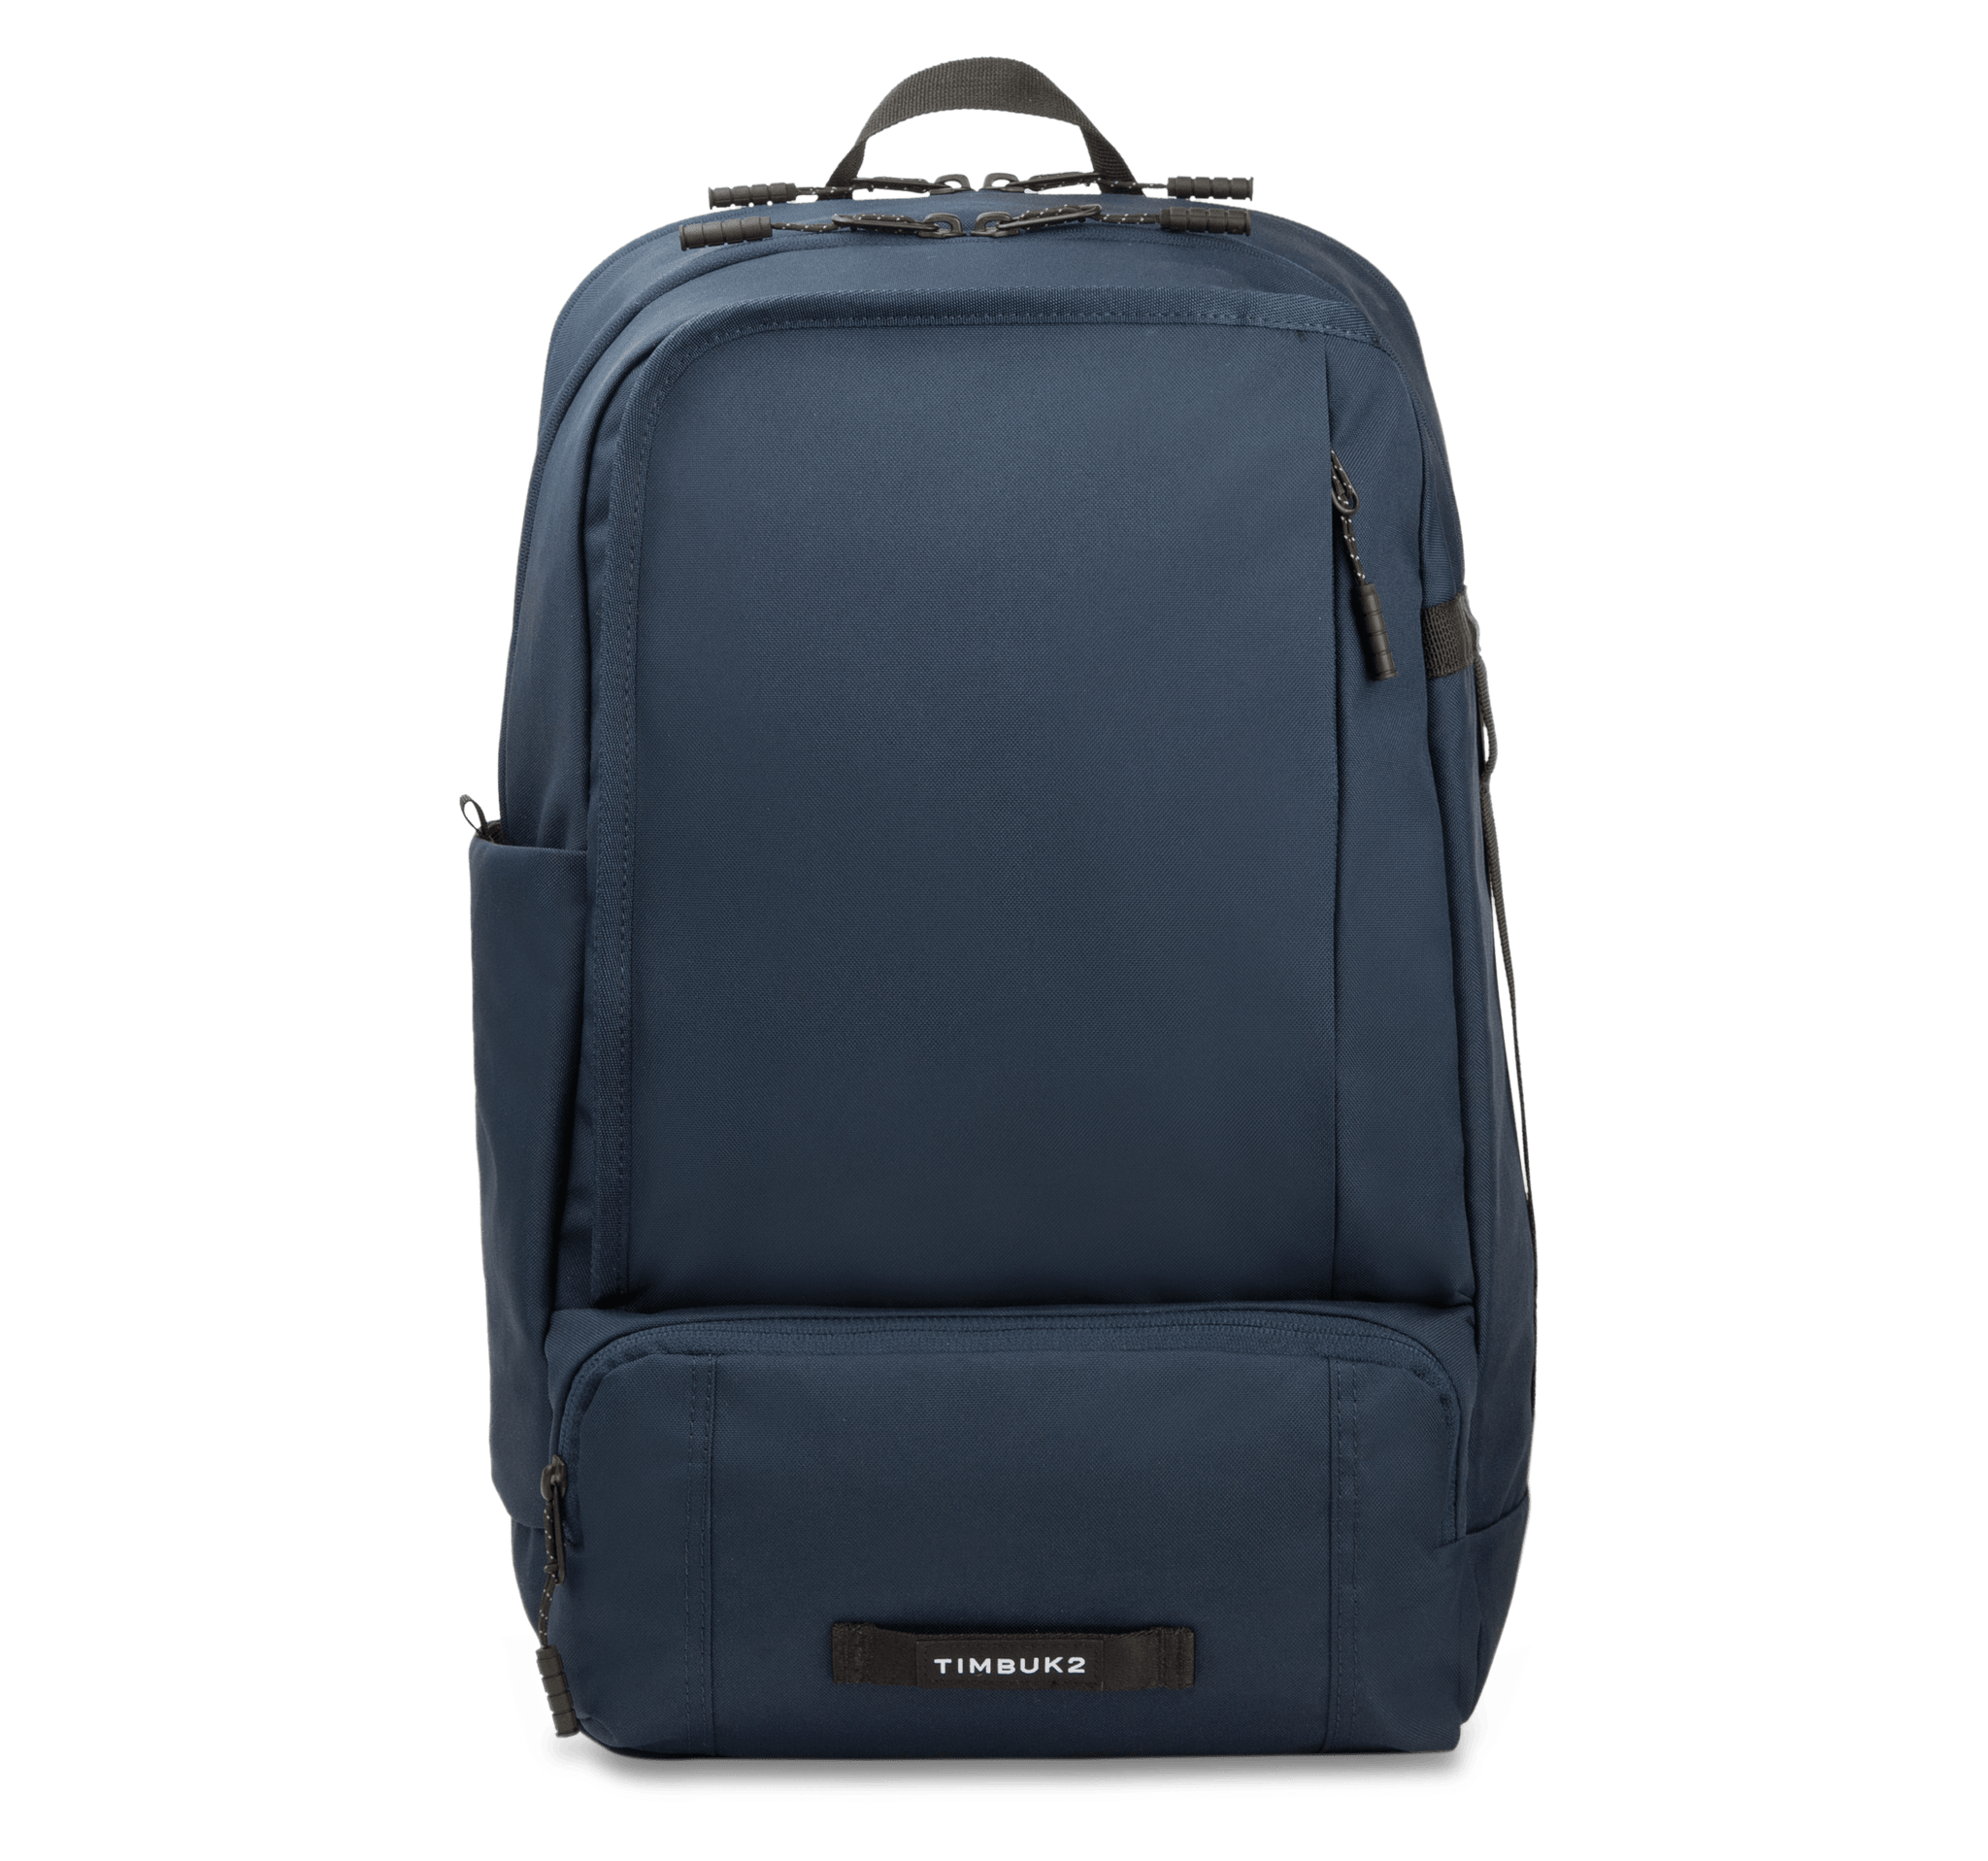 Buy Timbuk2 Command Laptop Messenger Bag Black/Gunmetal Medium at Amazon.in